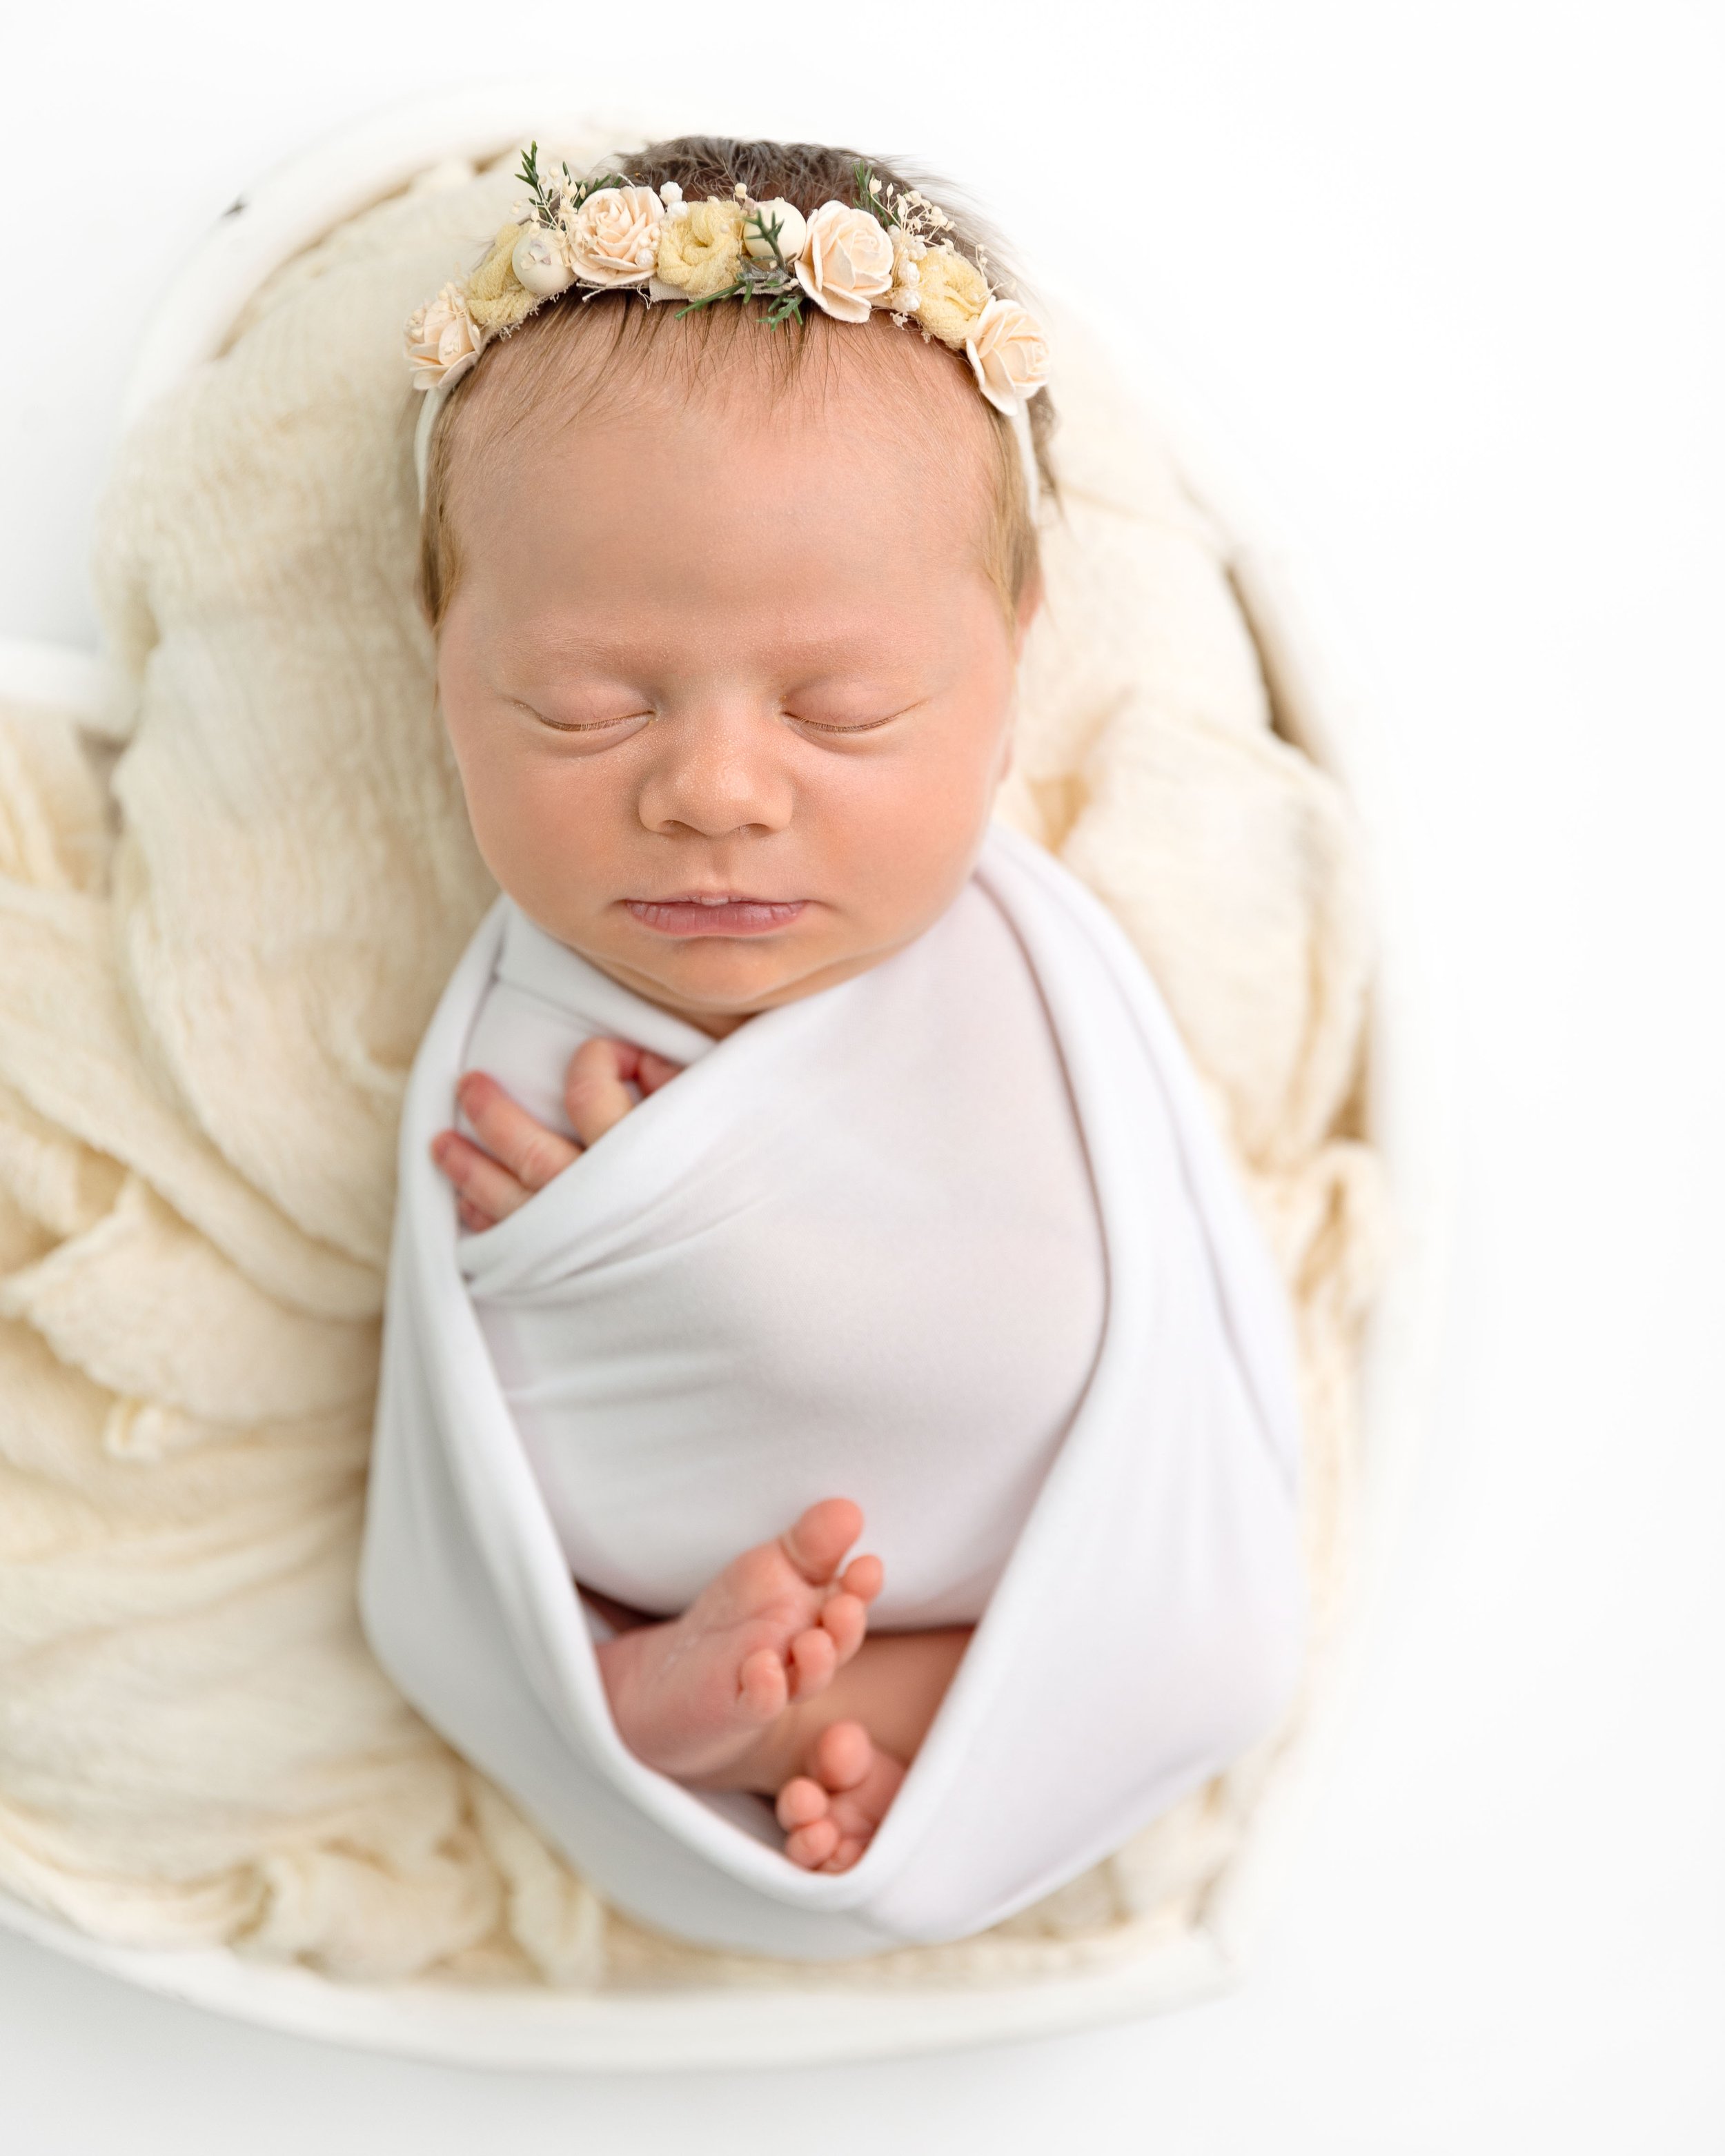 Newborn-photography-baby-images-family-photos-spokane-washington-6.jpg